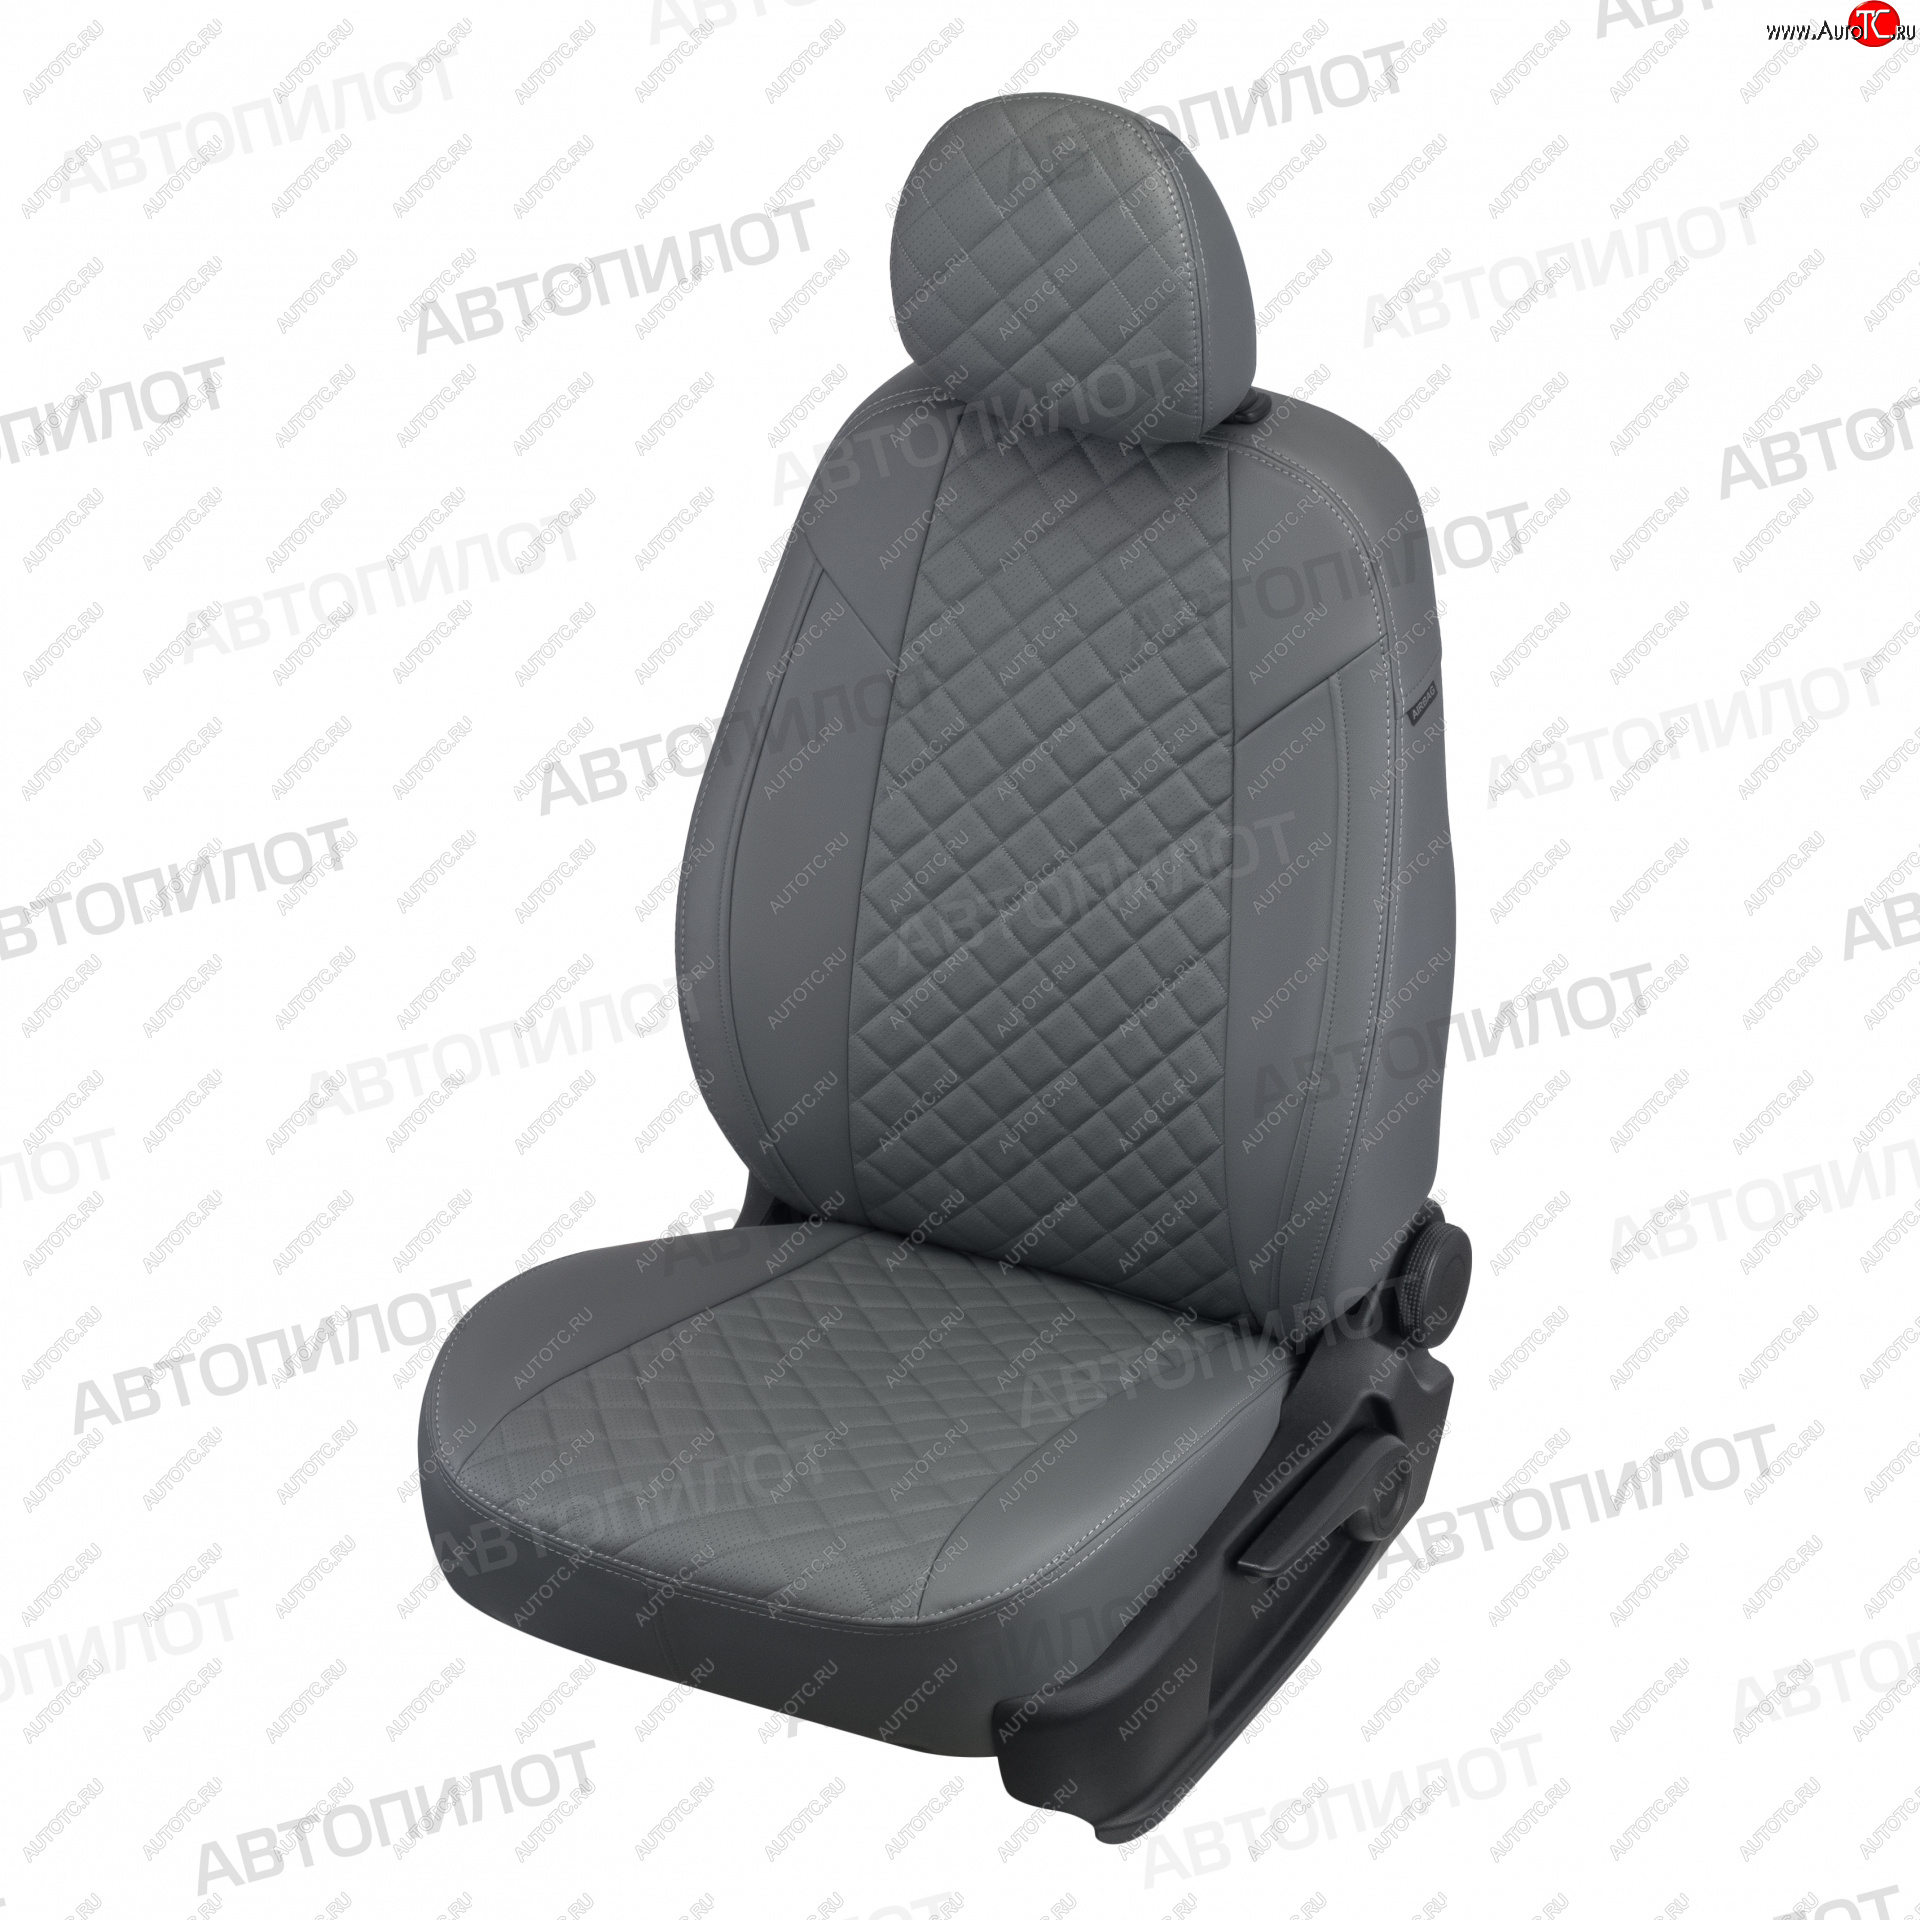 13 999 р. Чехлы сидений (экокожа) Автопилот Ромб  Hyundai Sonata  YF (2009-2014) (серый)